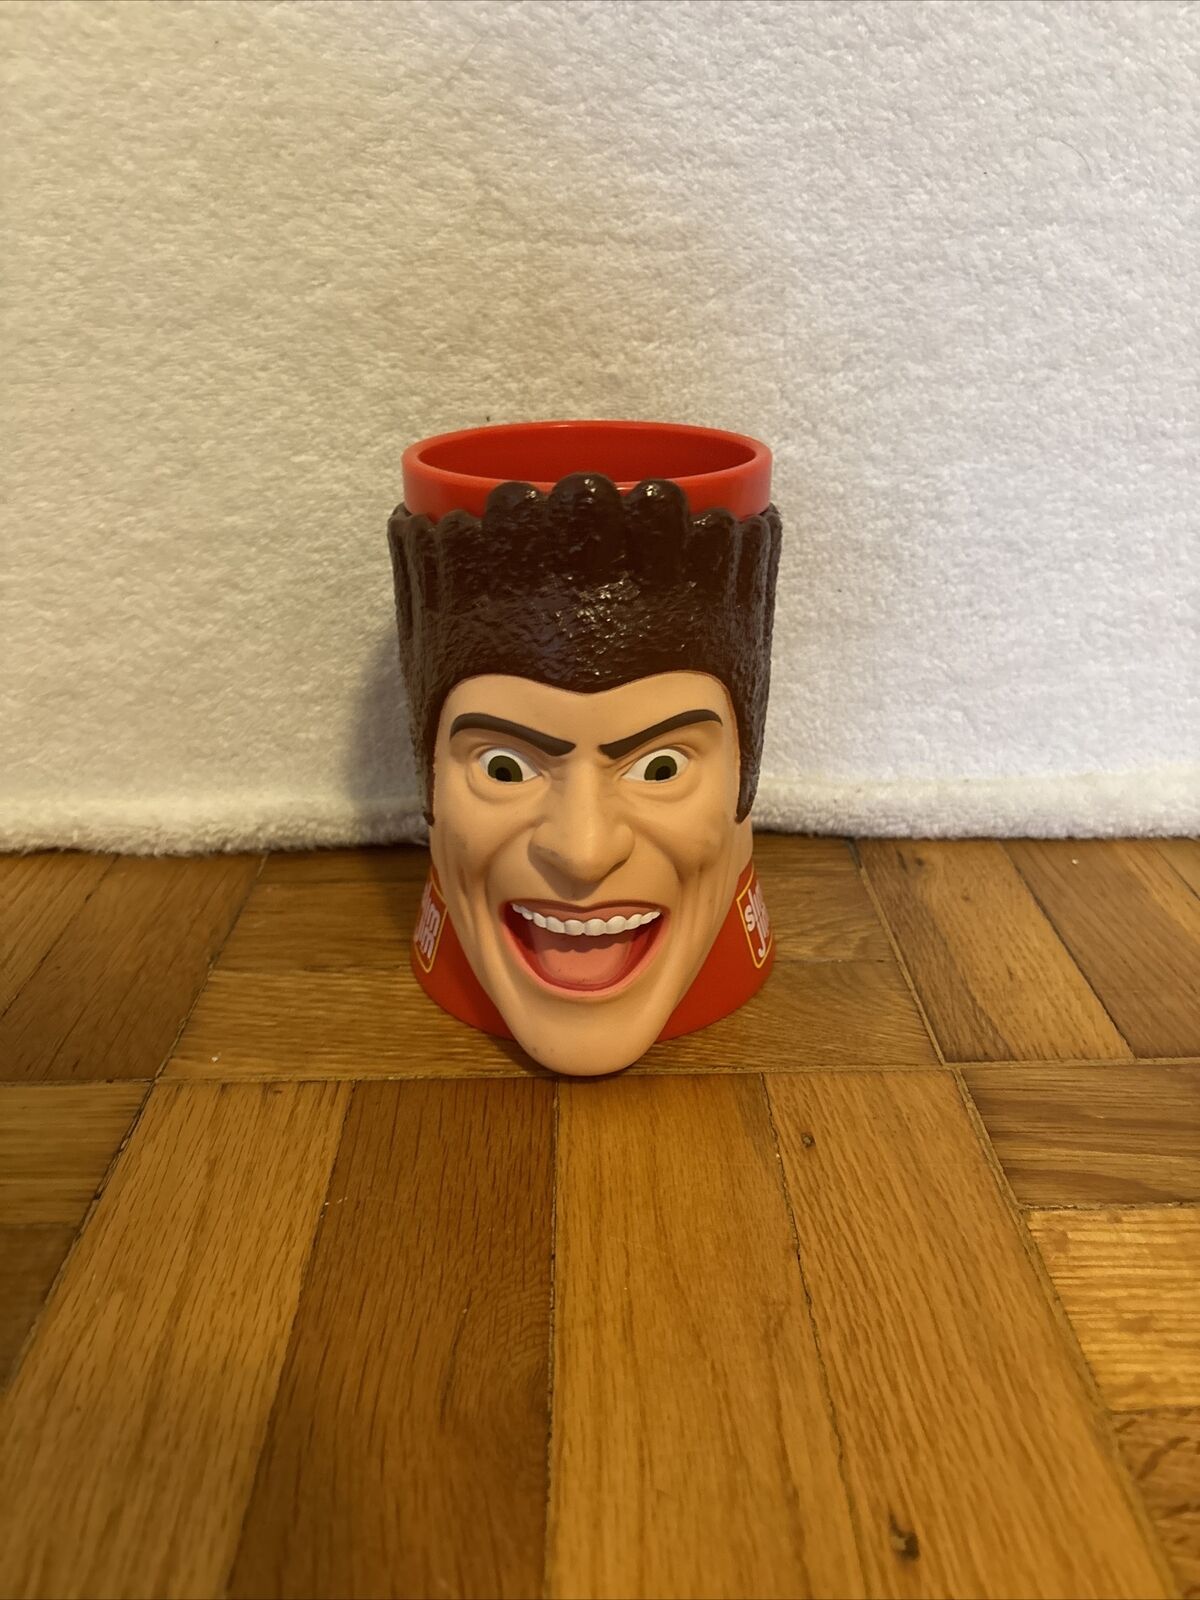 Slim Jim Guy Head Face Promotional Beef Jerky Stick Display Mug Cup 